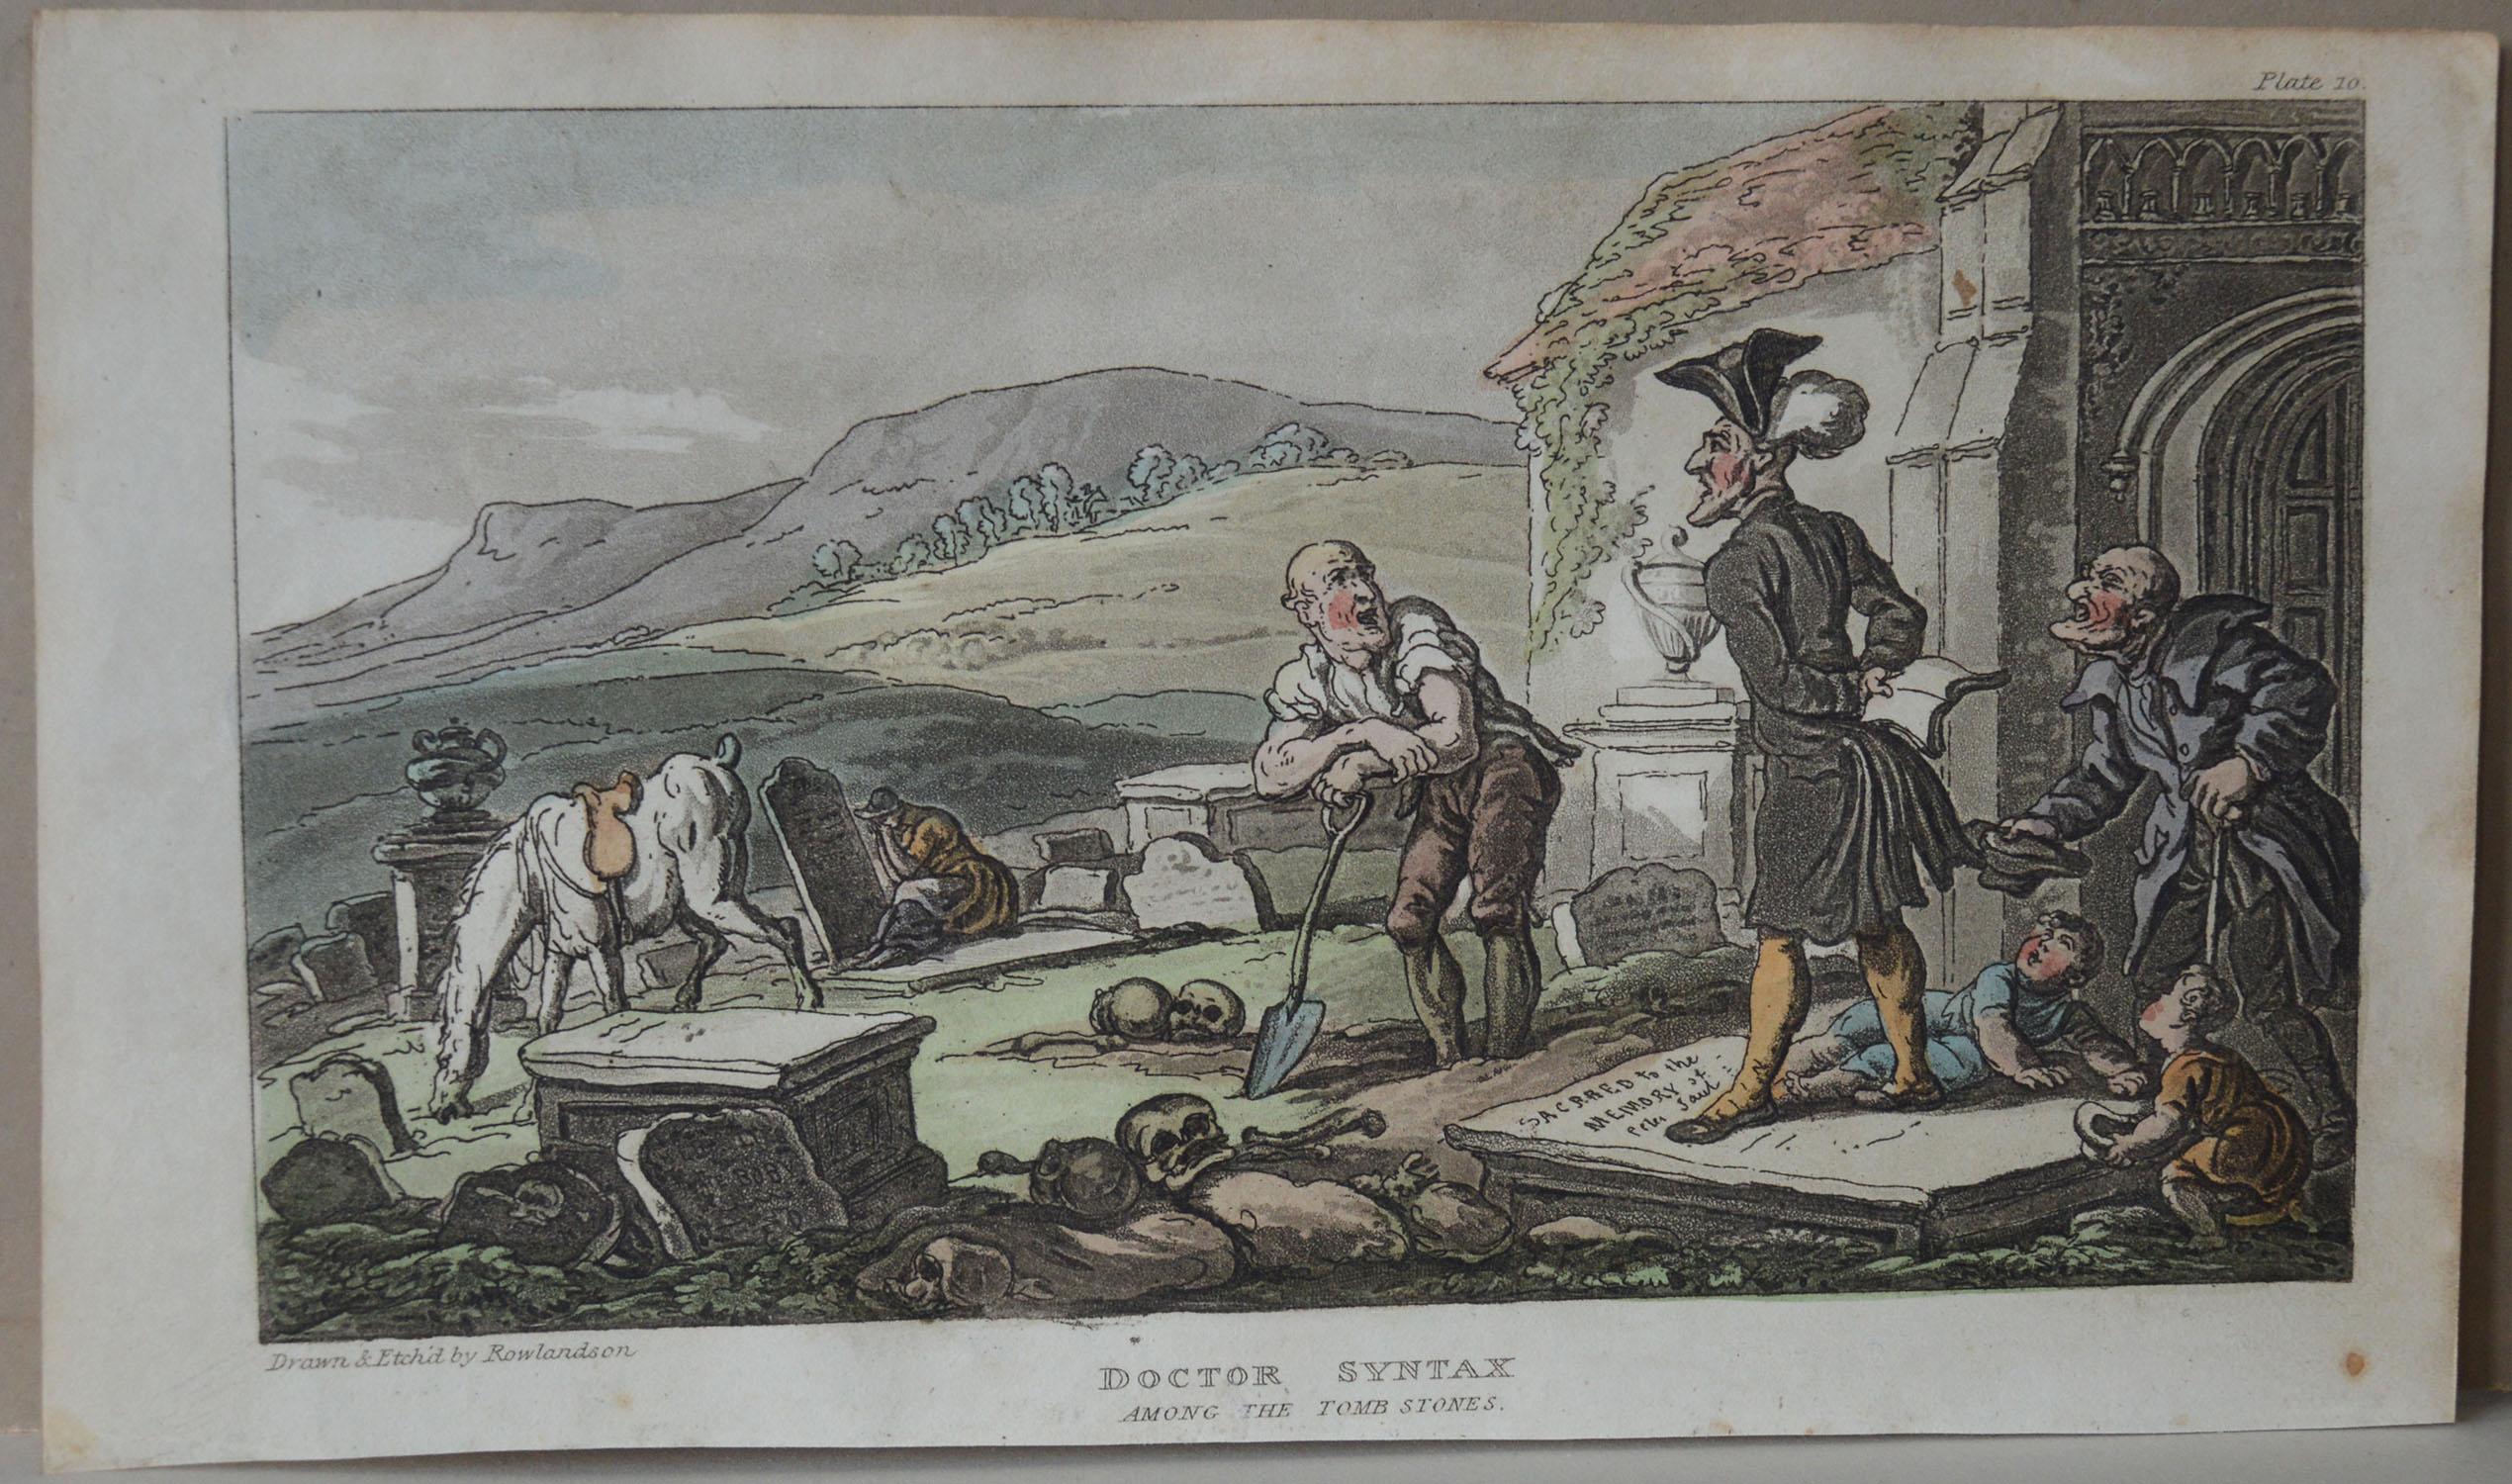 Georgian Original Antique Print after Thomas Rowlandson, 1813